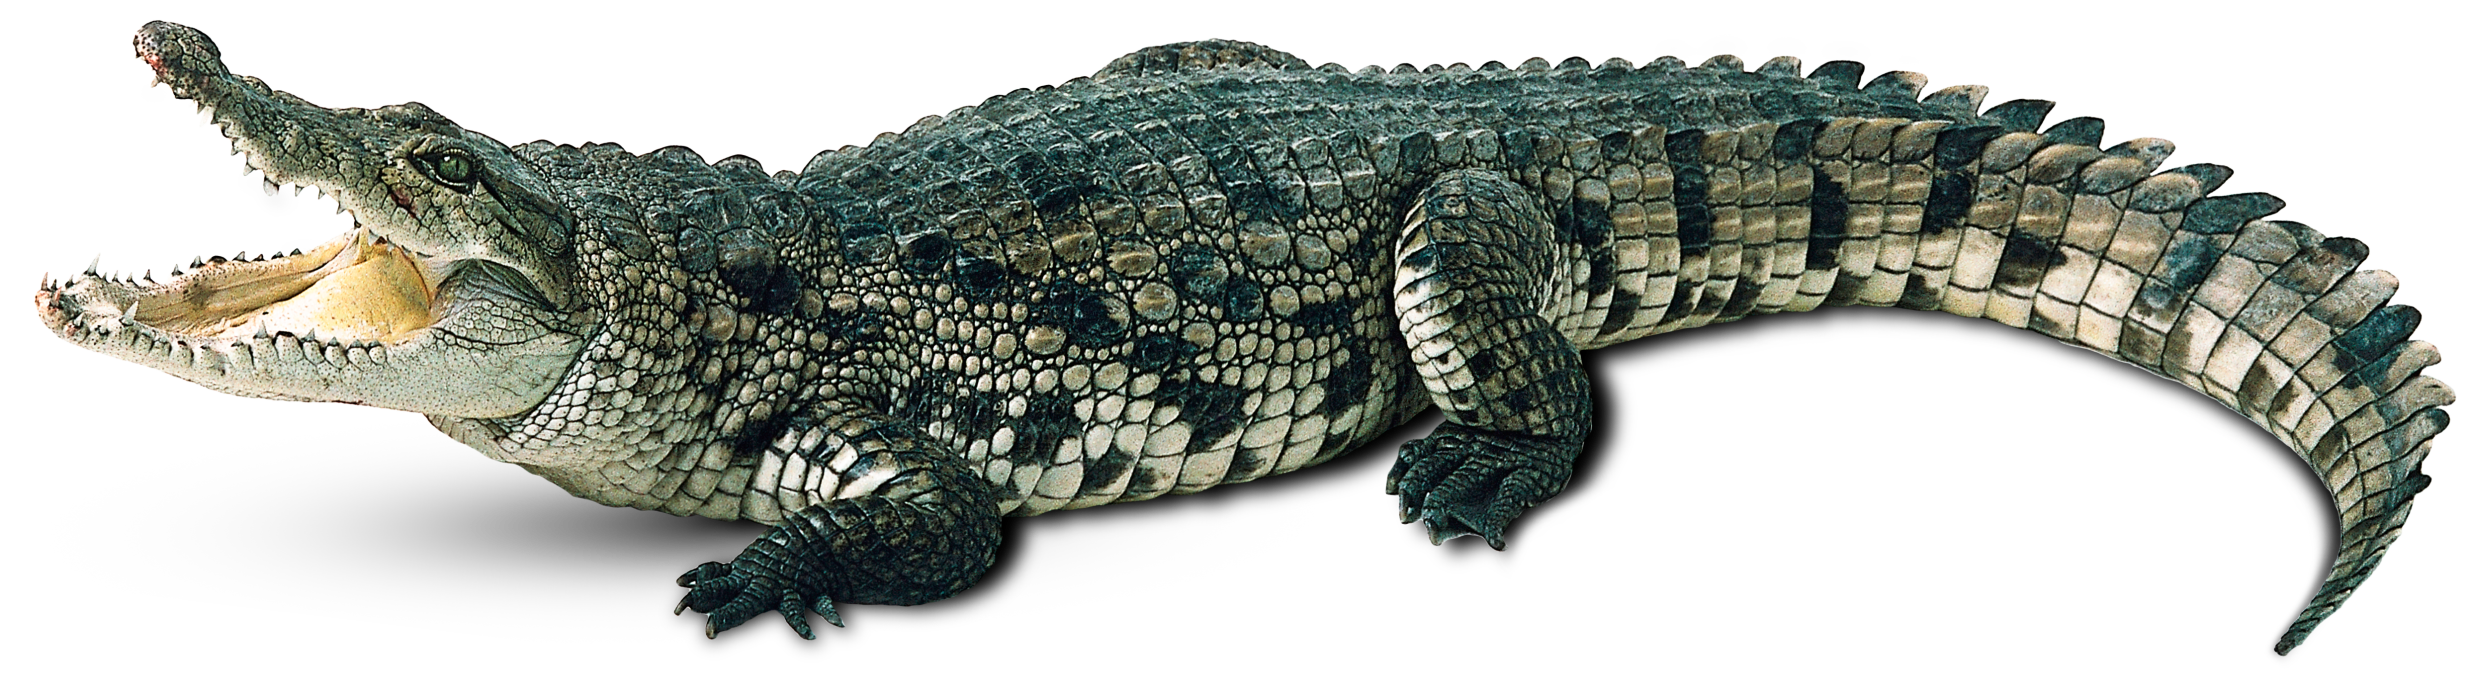 Aligator PNG HD - 144332